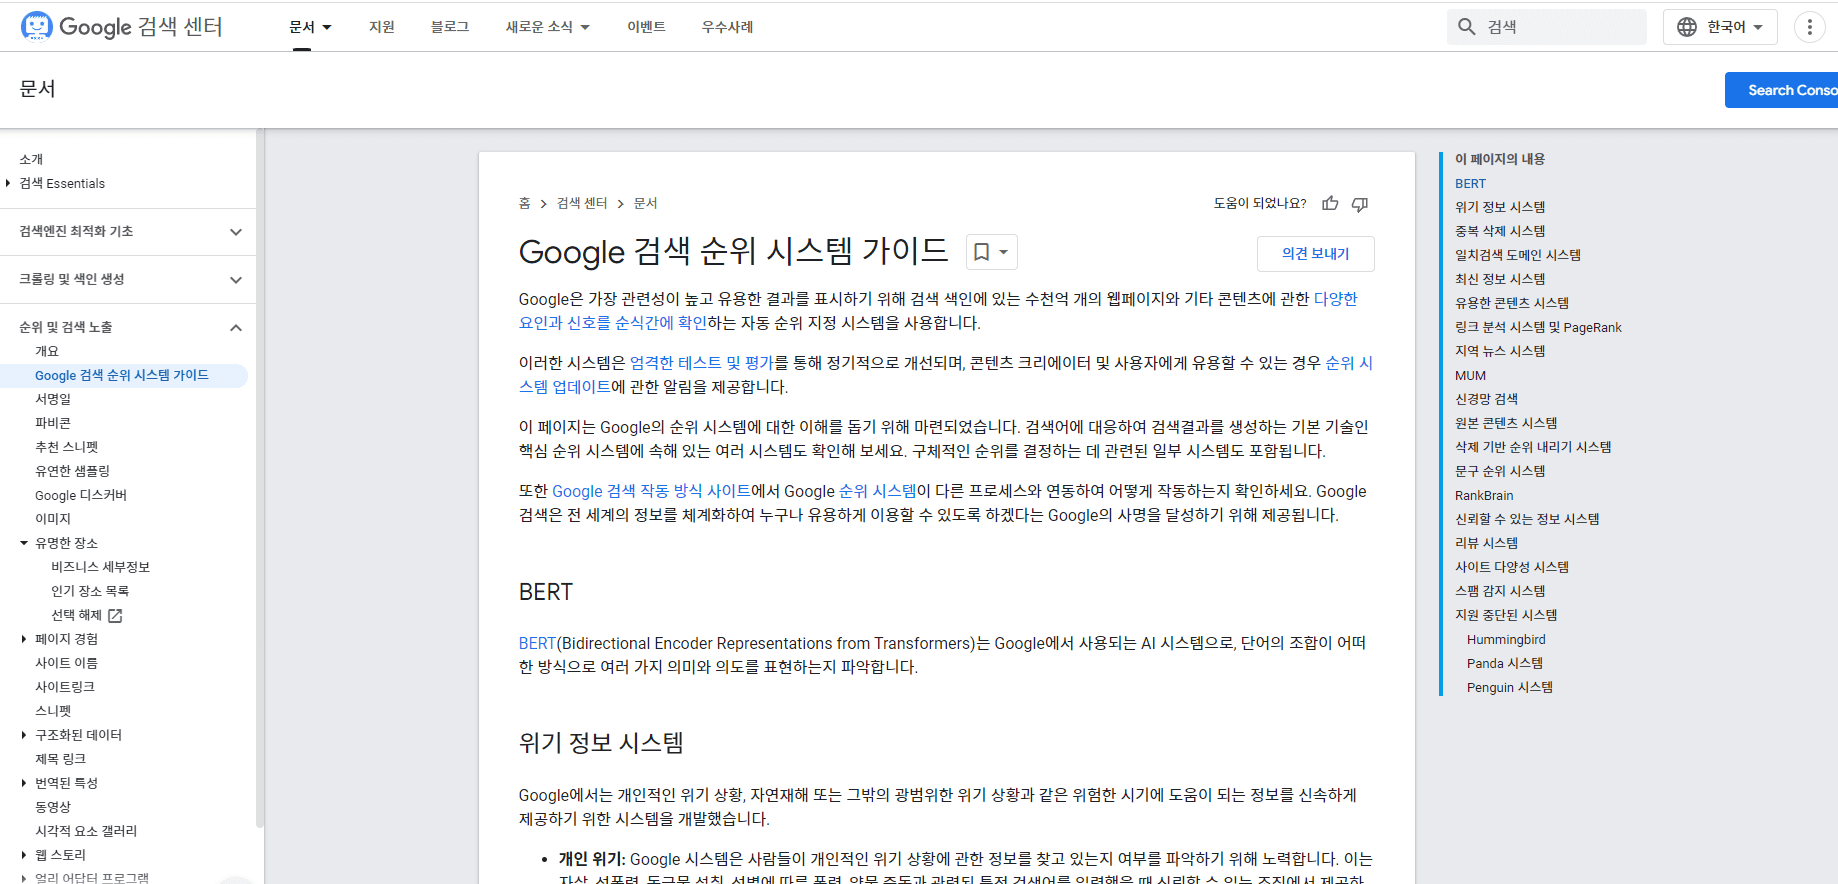 google_seo_guide_rankpage